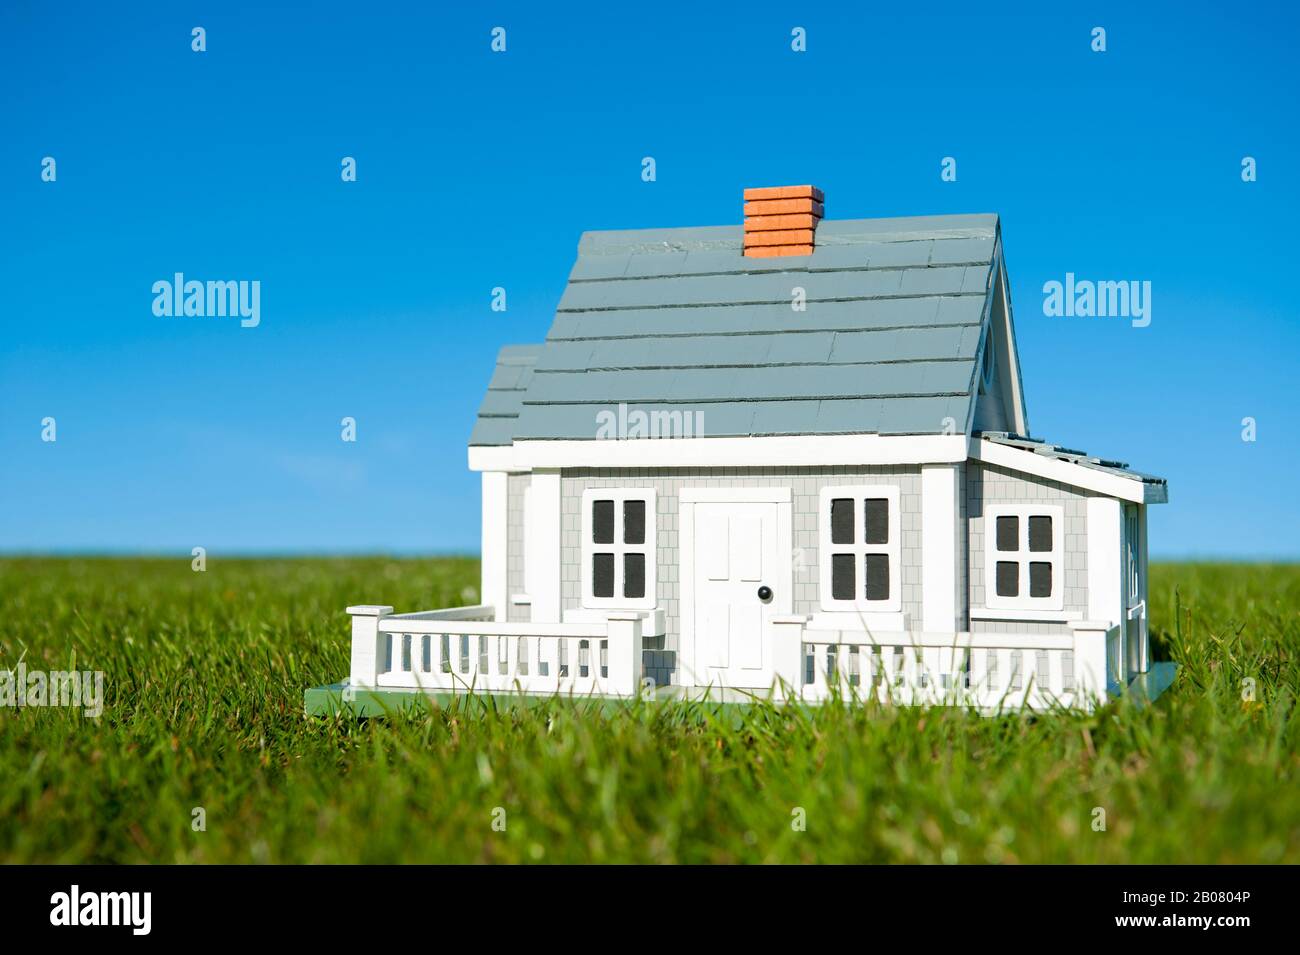 Casa en miniatura con cerca de piquete blanco en un exuberante césped de césped verde frente a un horizonte azul cielo Foto de stock